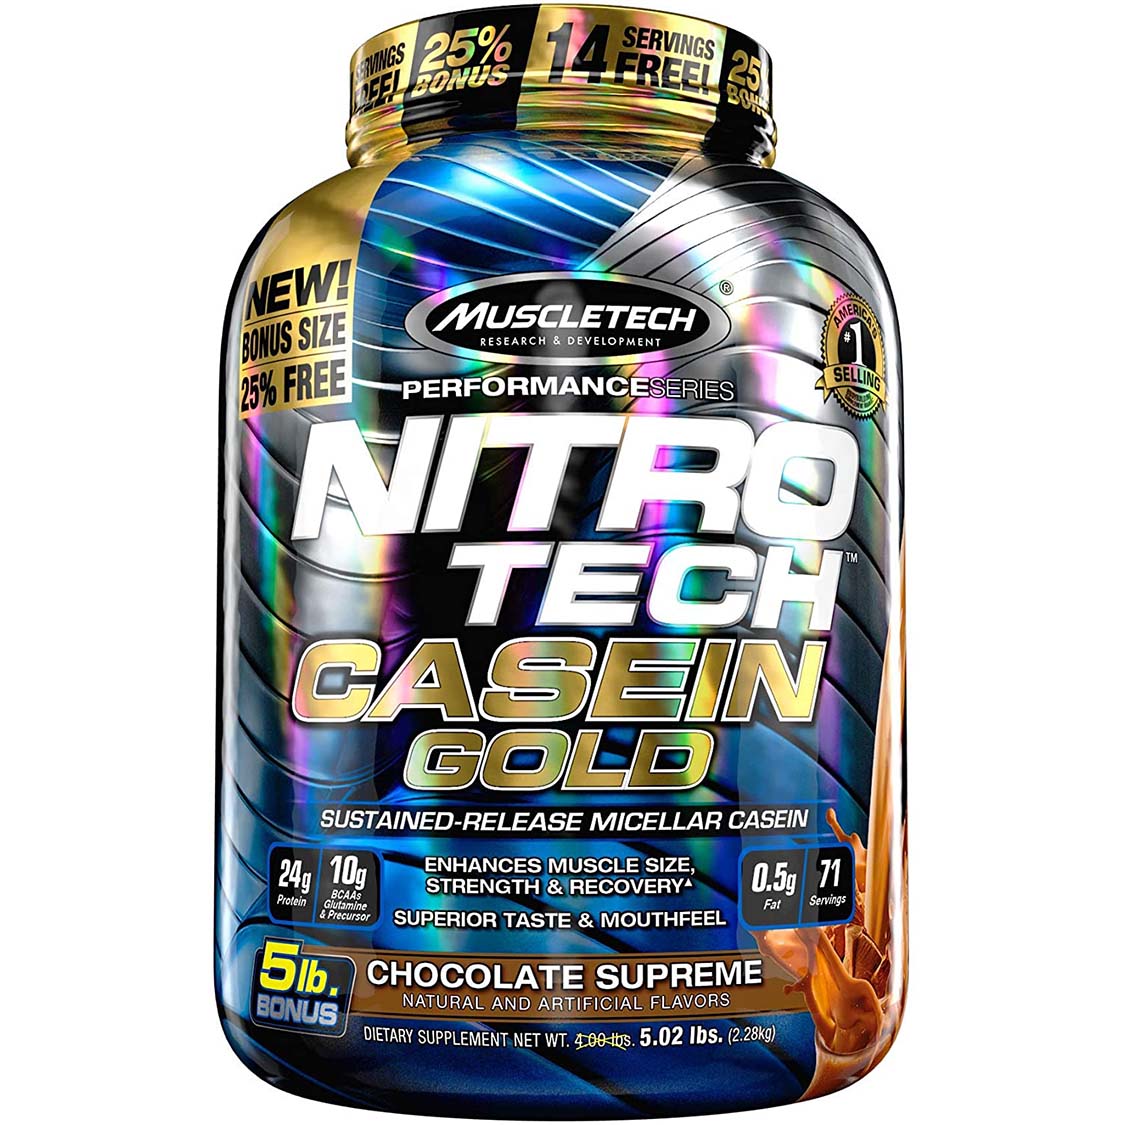 Muscletech Nitro Tech Casein Gold, Chocolate Supreme, 5 LB